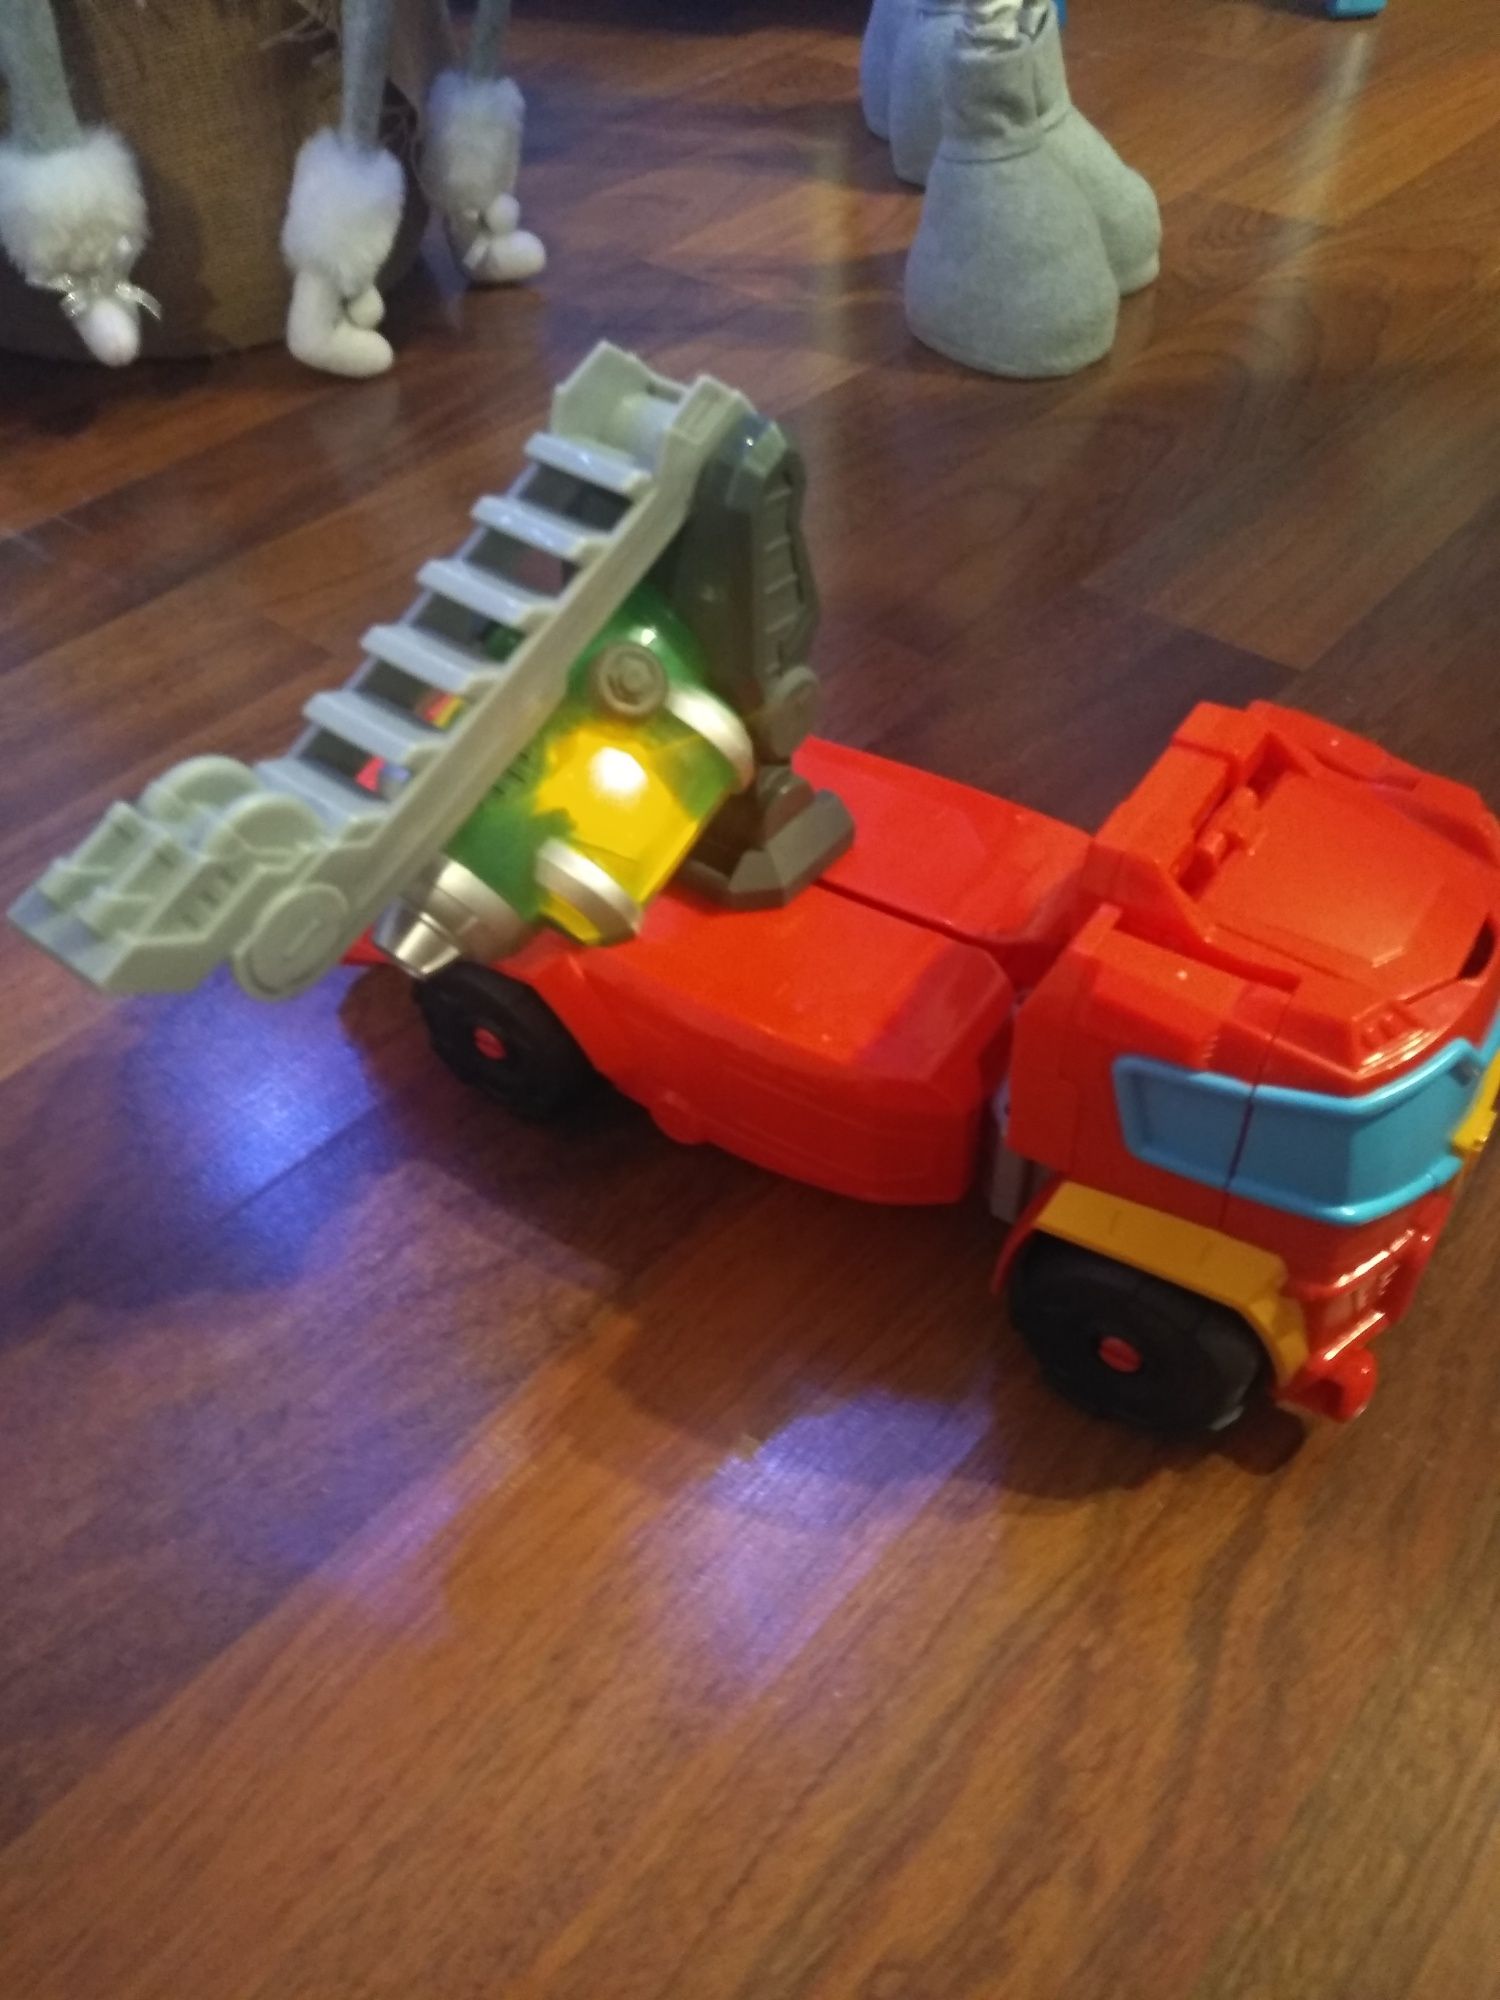 Transformers firmy Hasbro